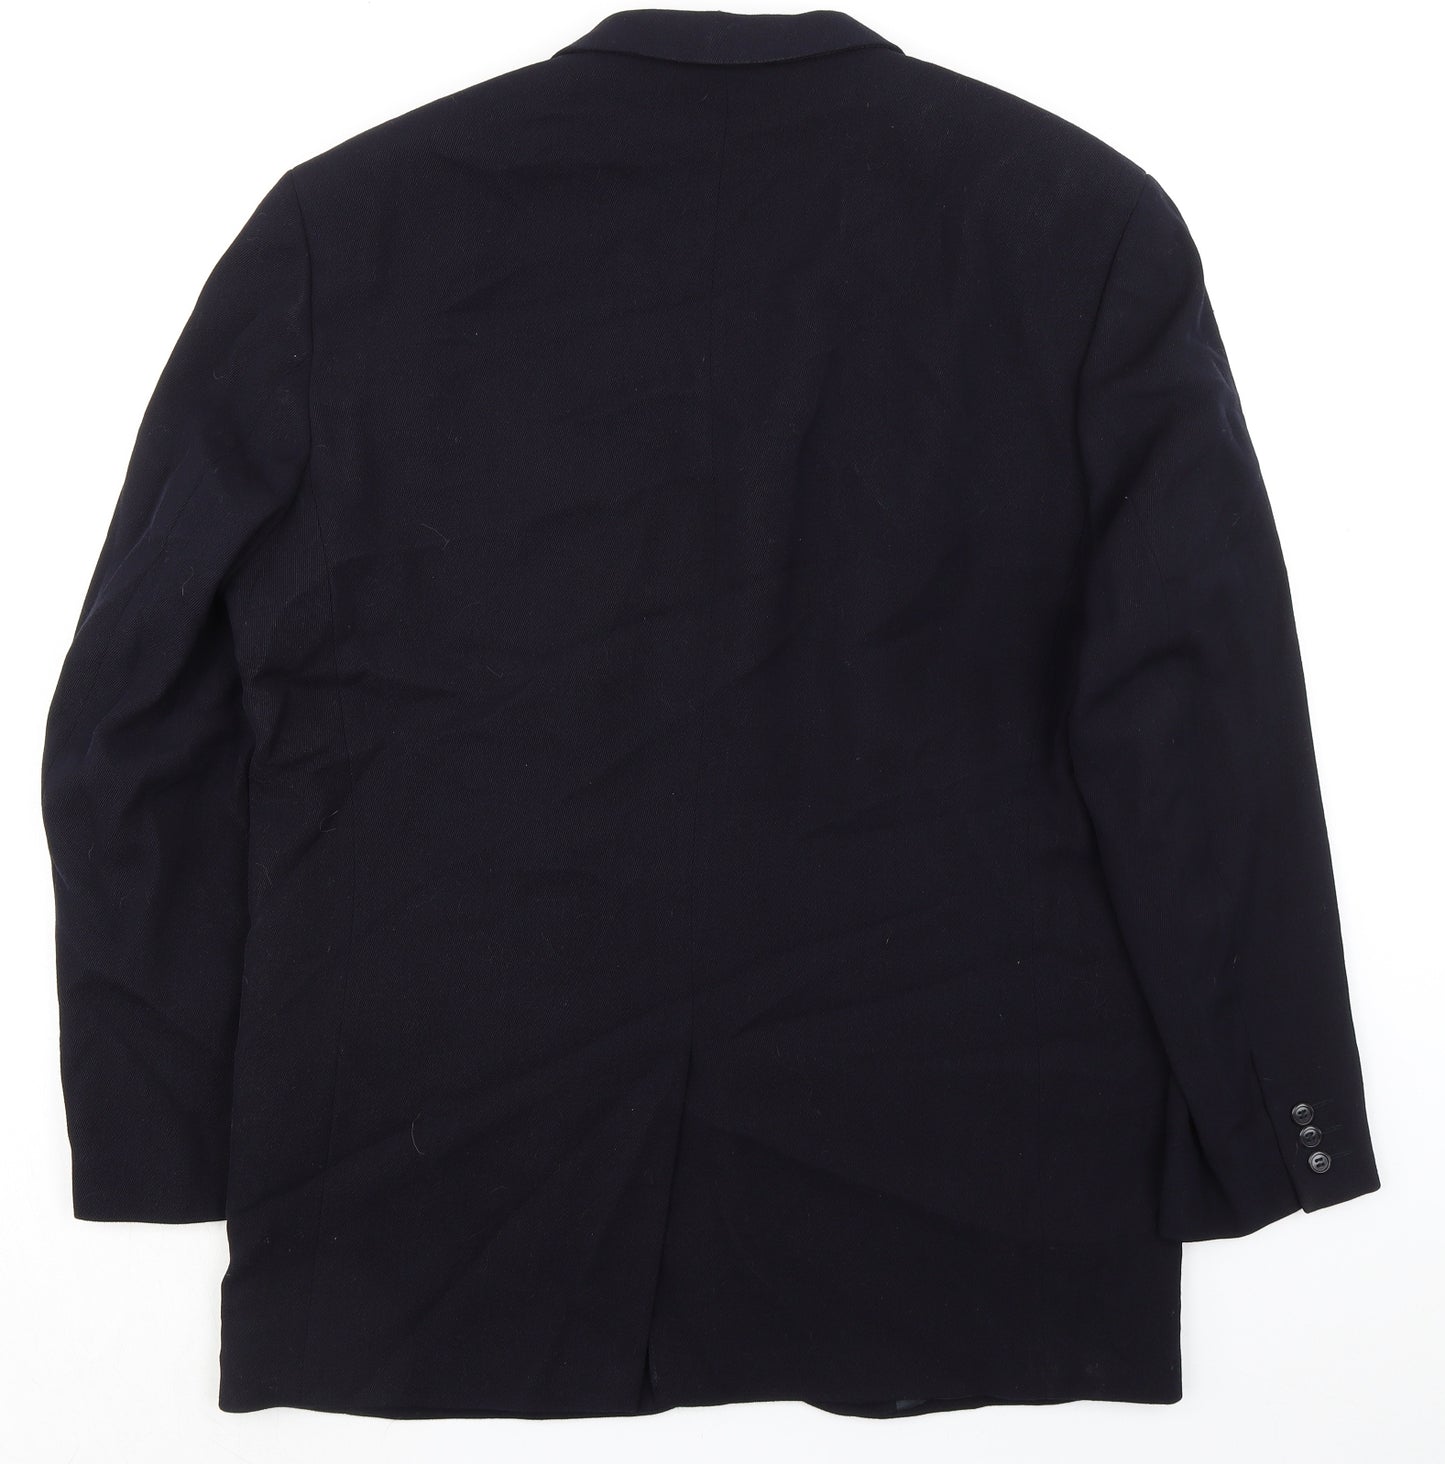 GB company Mens Blue Wool Jacket Suit Jacket Size 42 Regular